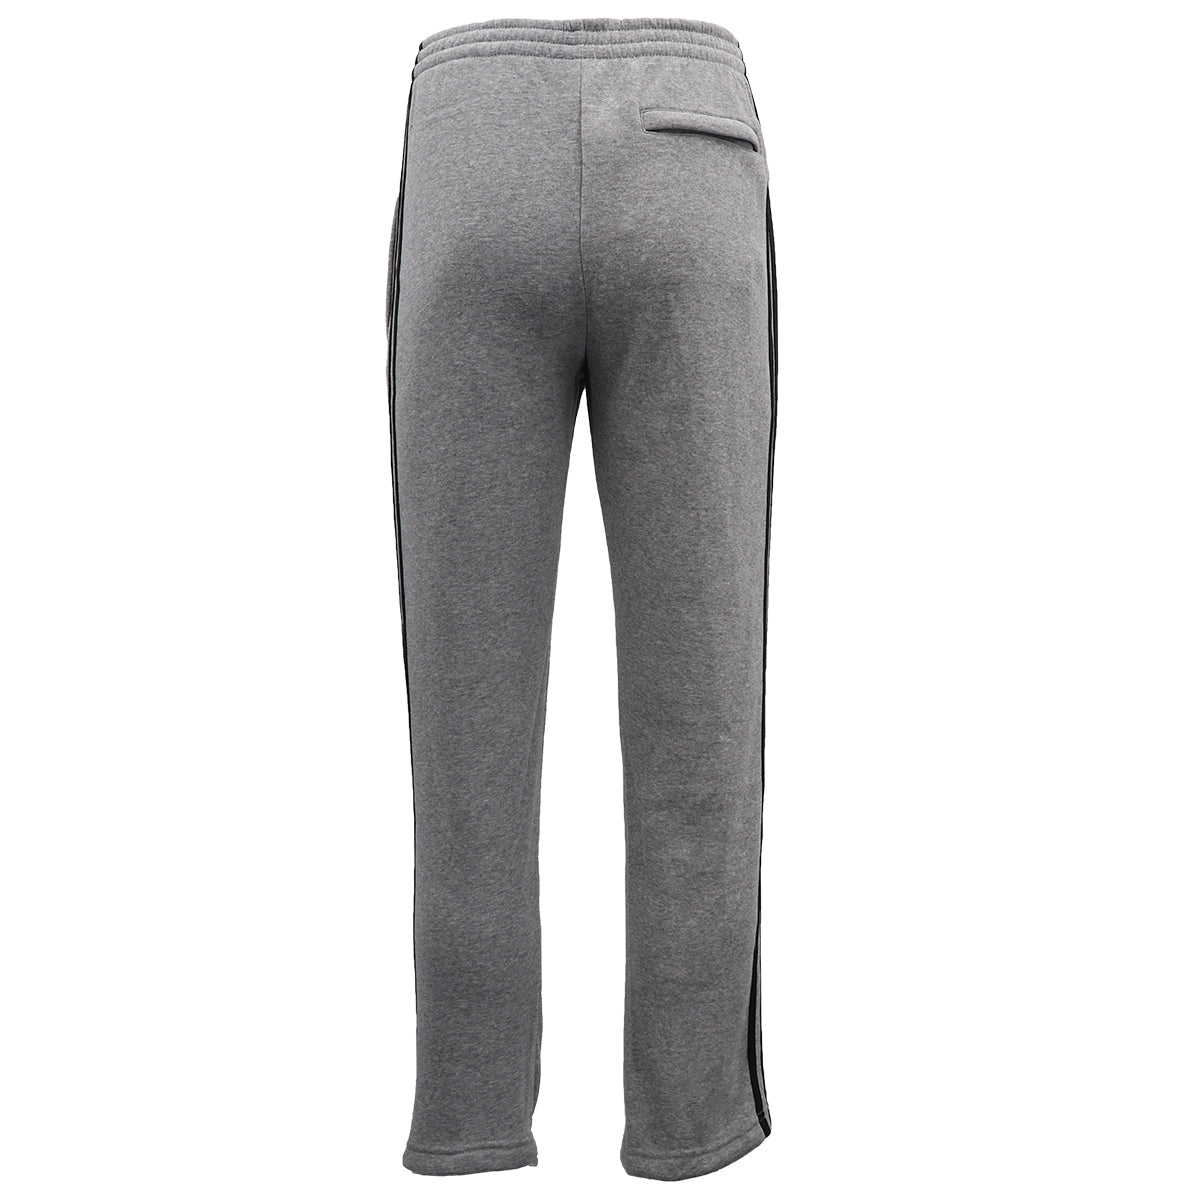 Men's Fleece Casual Sports Track Pants w Zip Pocket Striped Sweat Trousers S-6XL, Charcoal w Black Stripes, 6XL